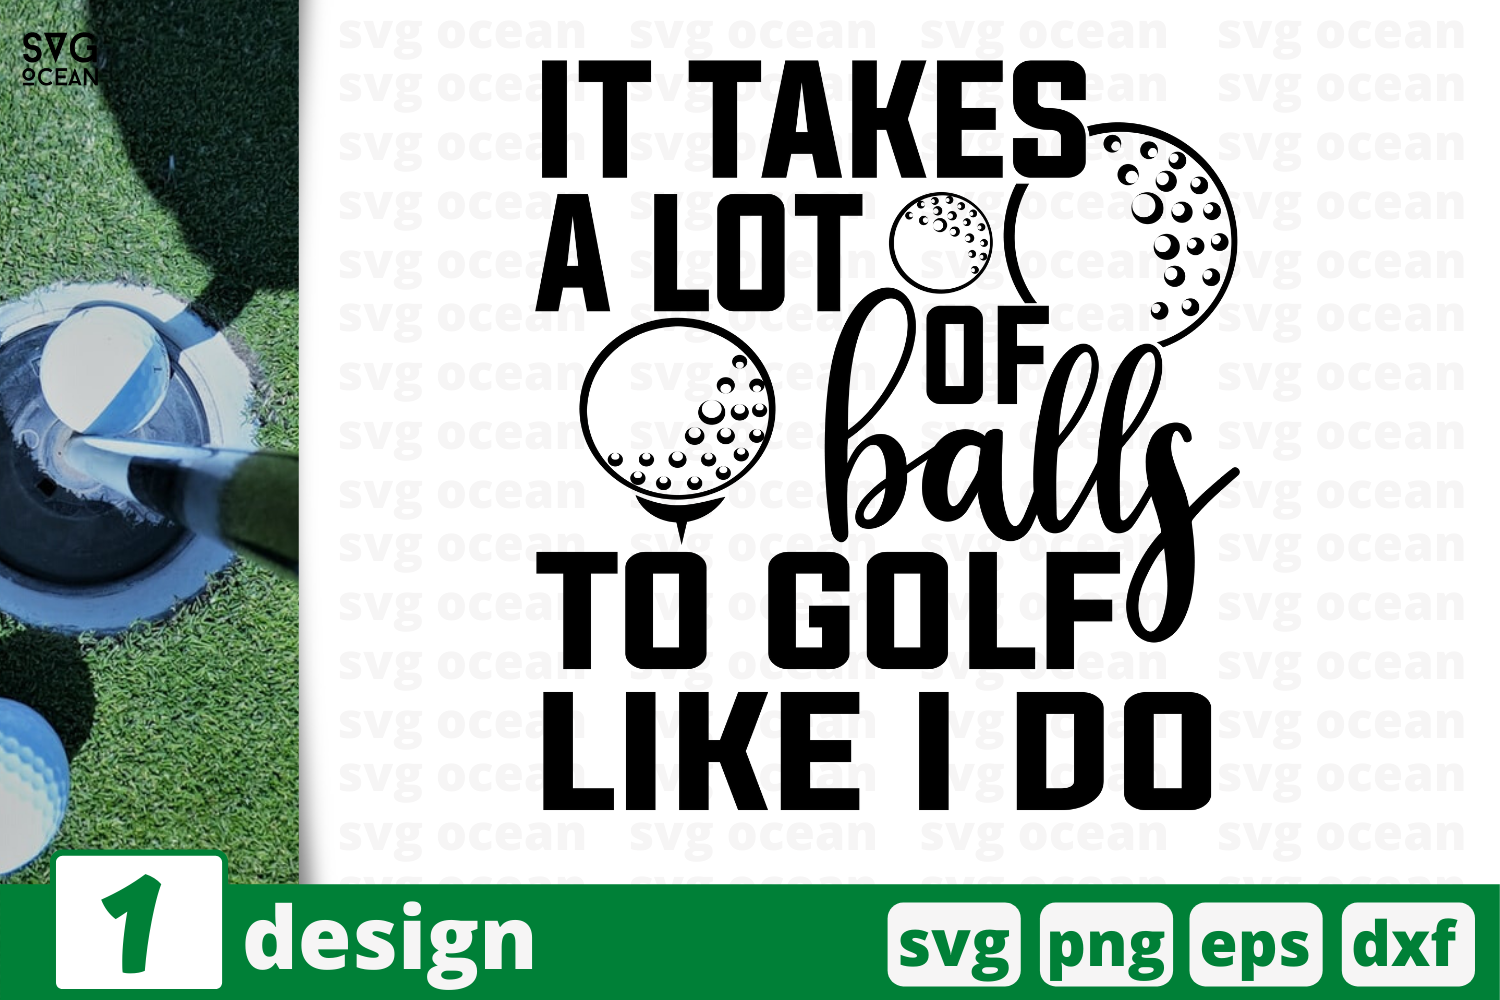 Download 1 To Golf Like I Do Sport Quotes Cricut Svg By Svgocean Thehungryjpeg Com